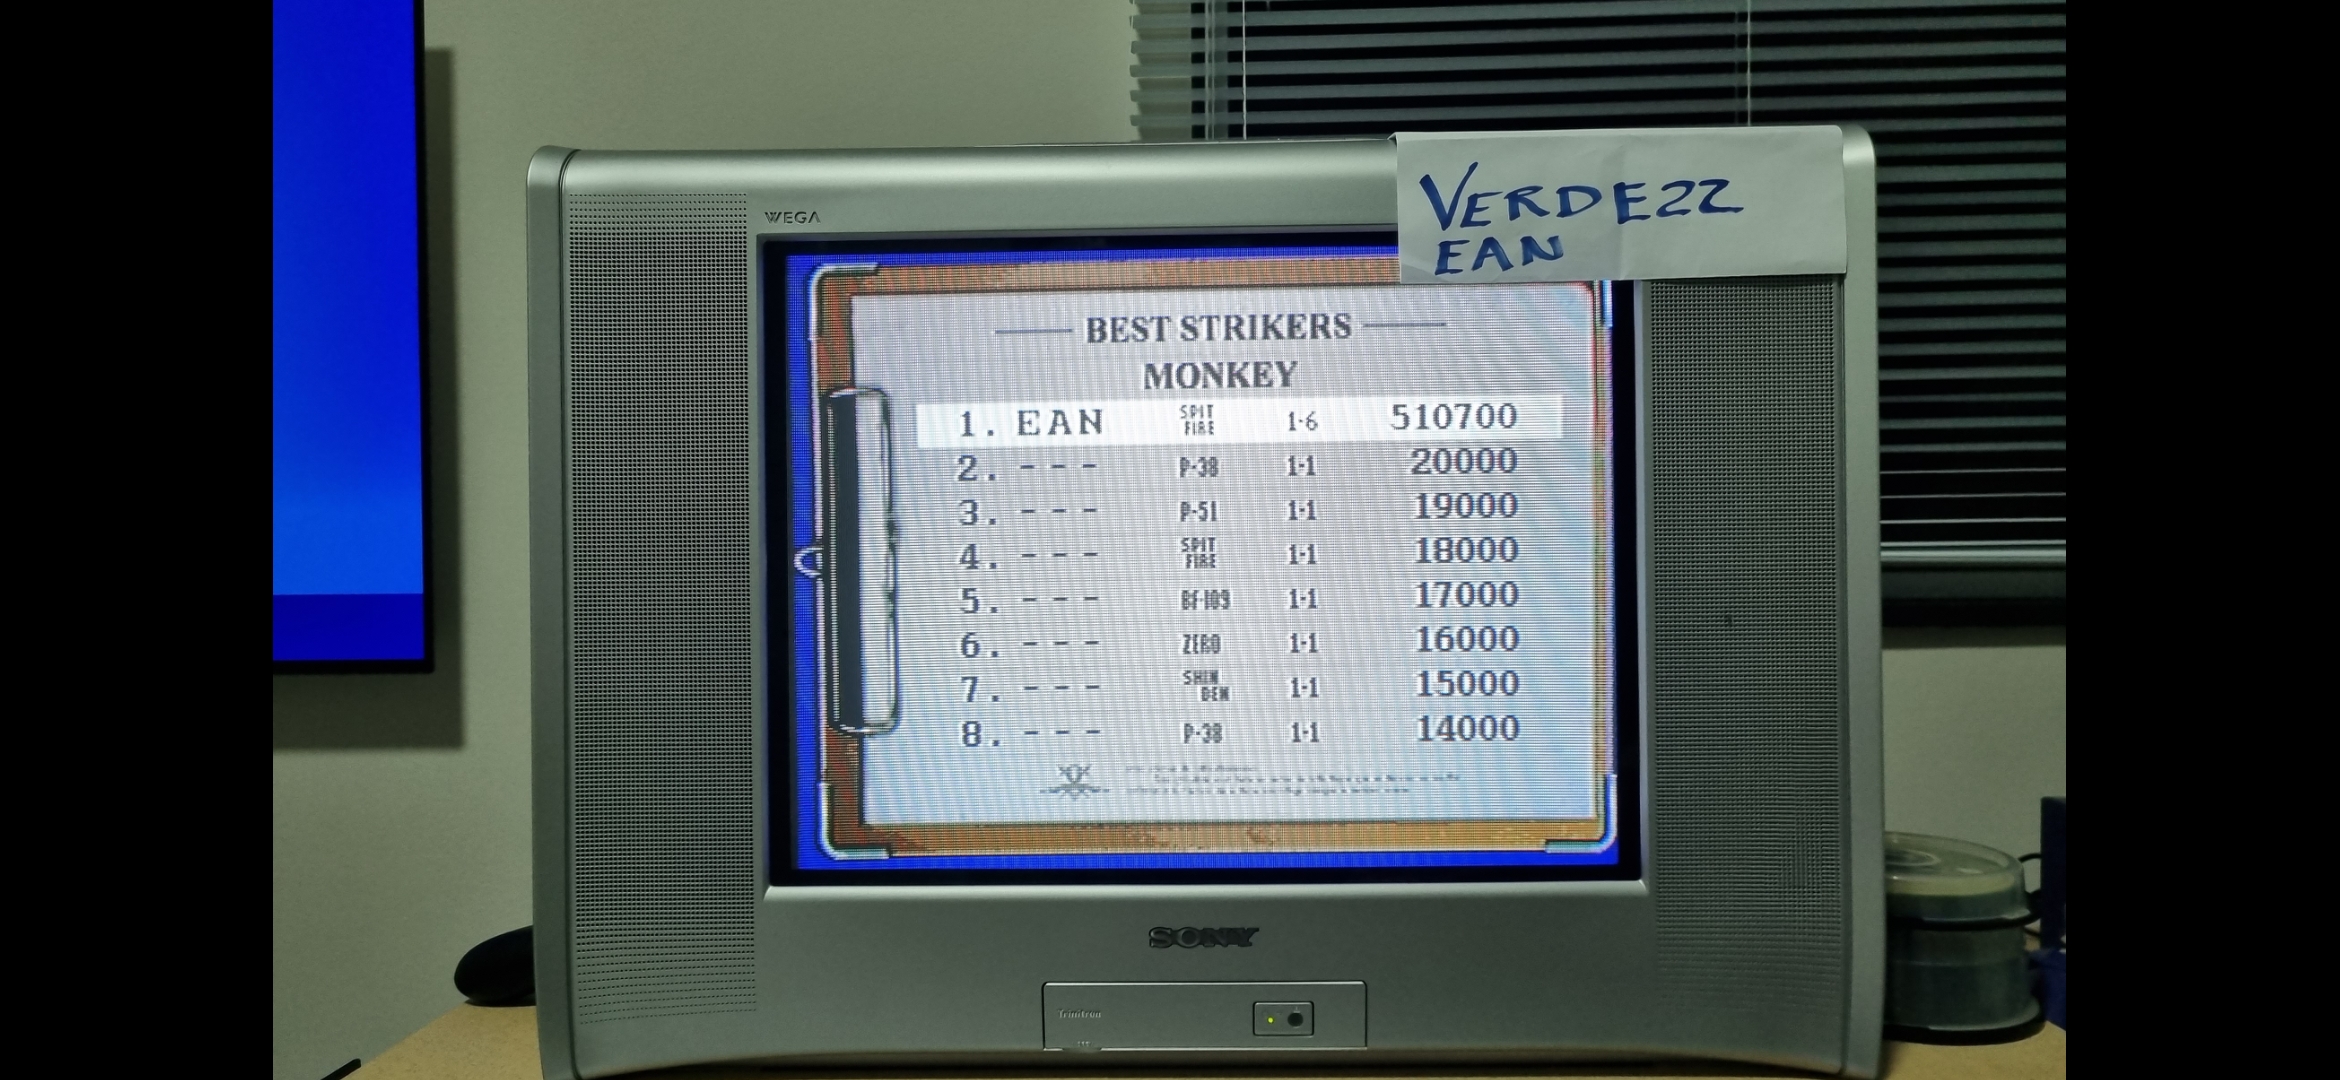 Verde22: Strikers 1945 [Skill 1/Monkey/Original 1] (Sega Saturn) 510,700 points on 2022-06-25 20:28:39